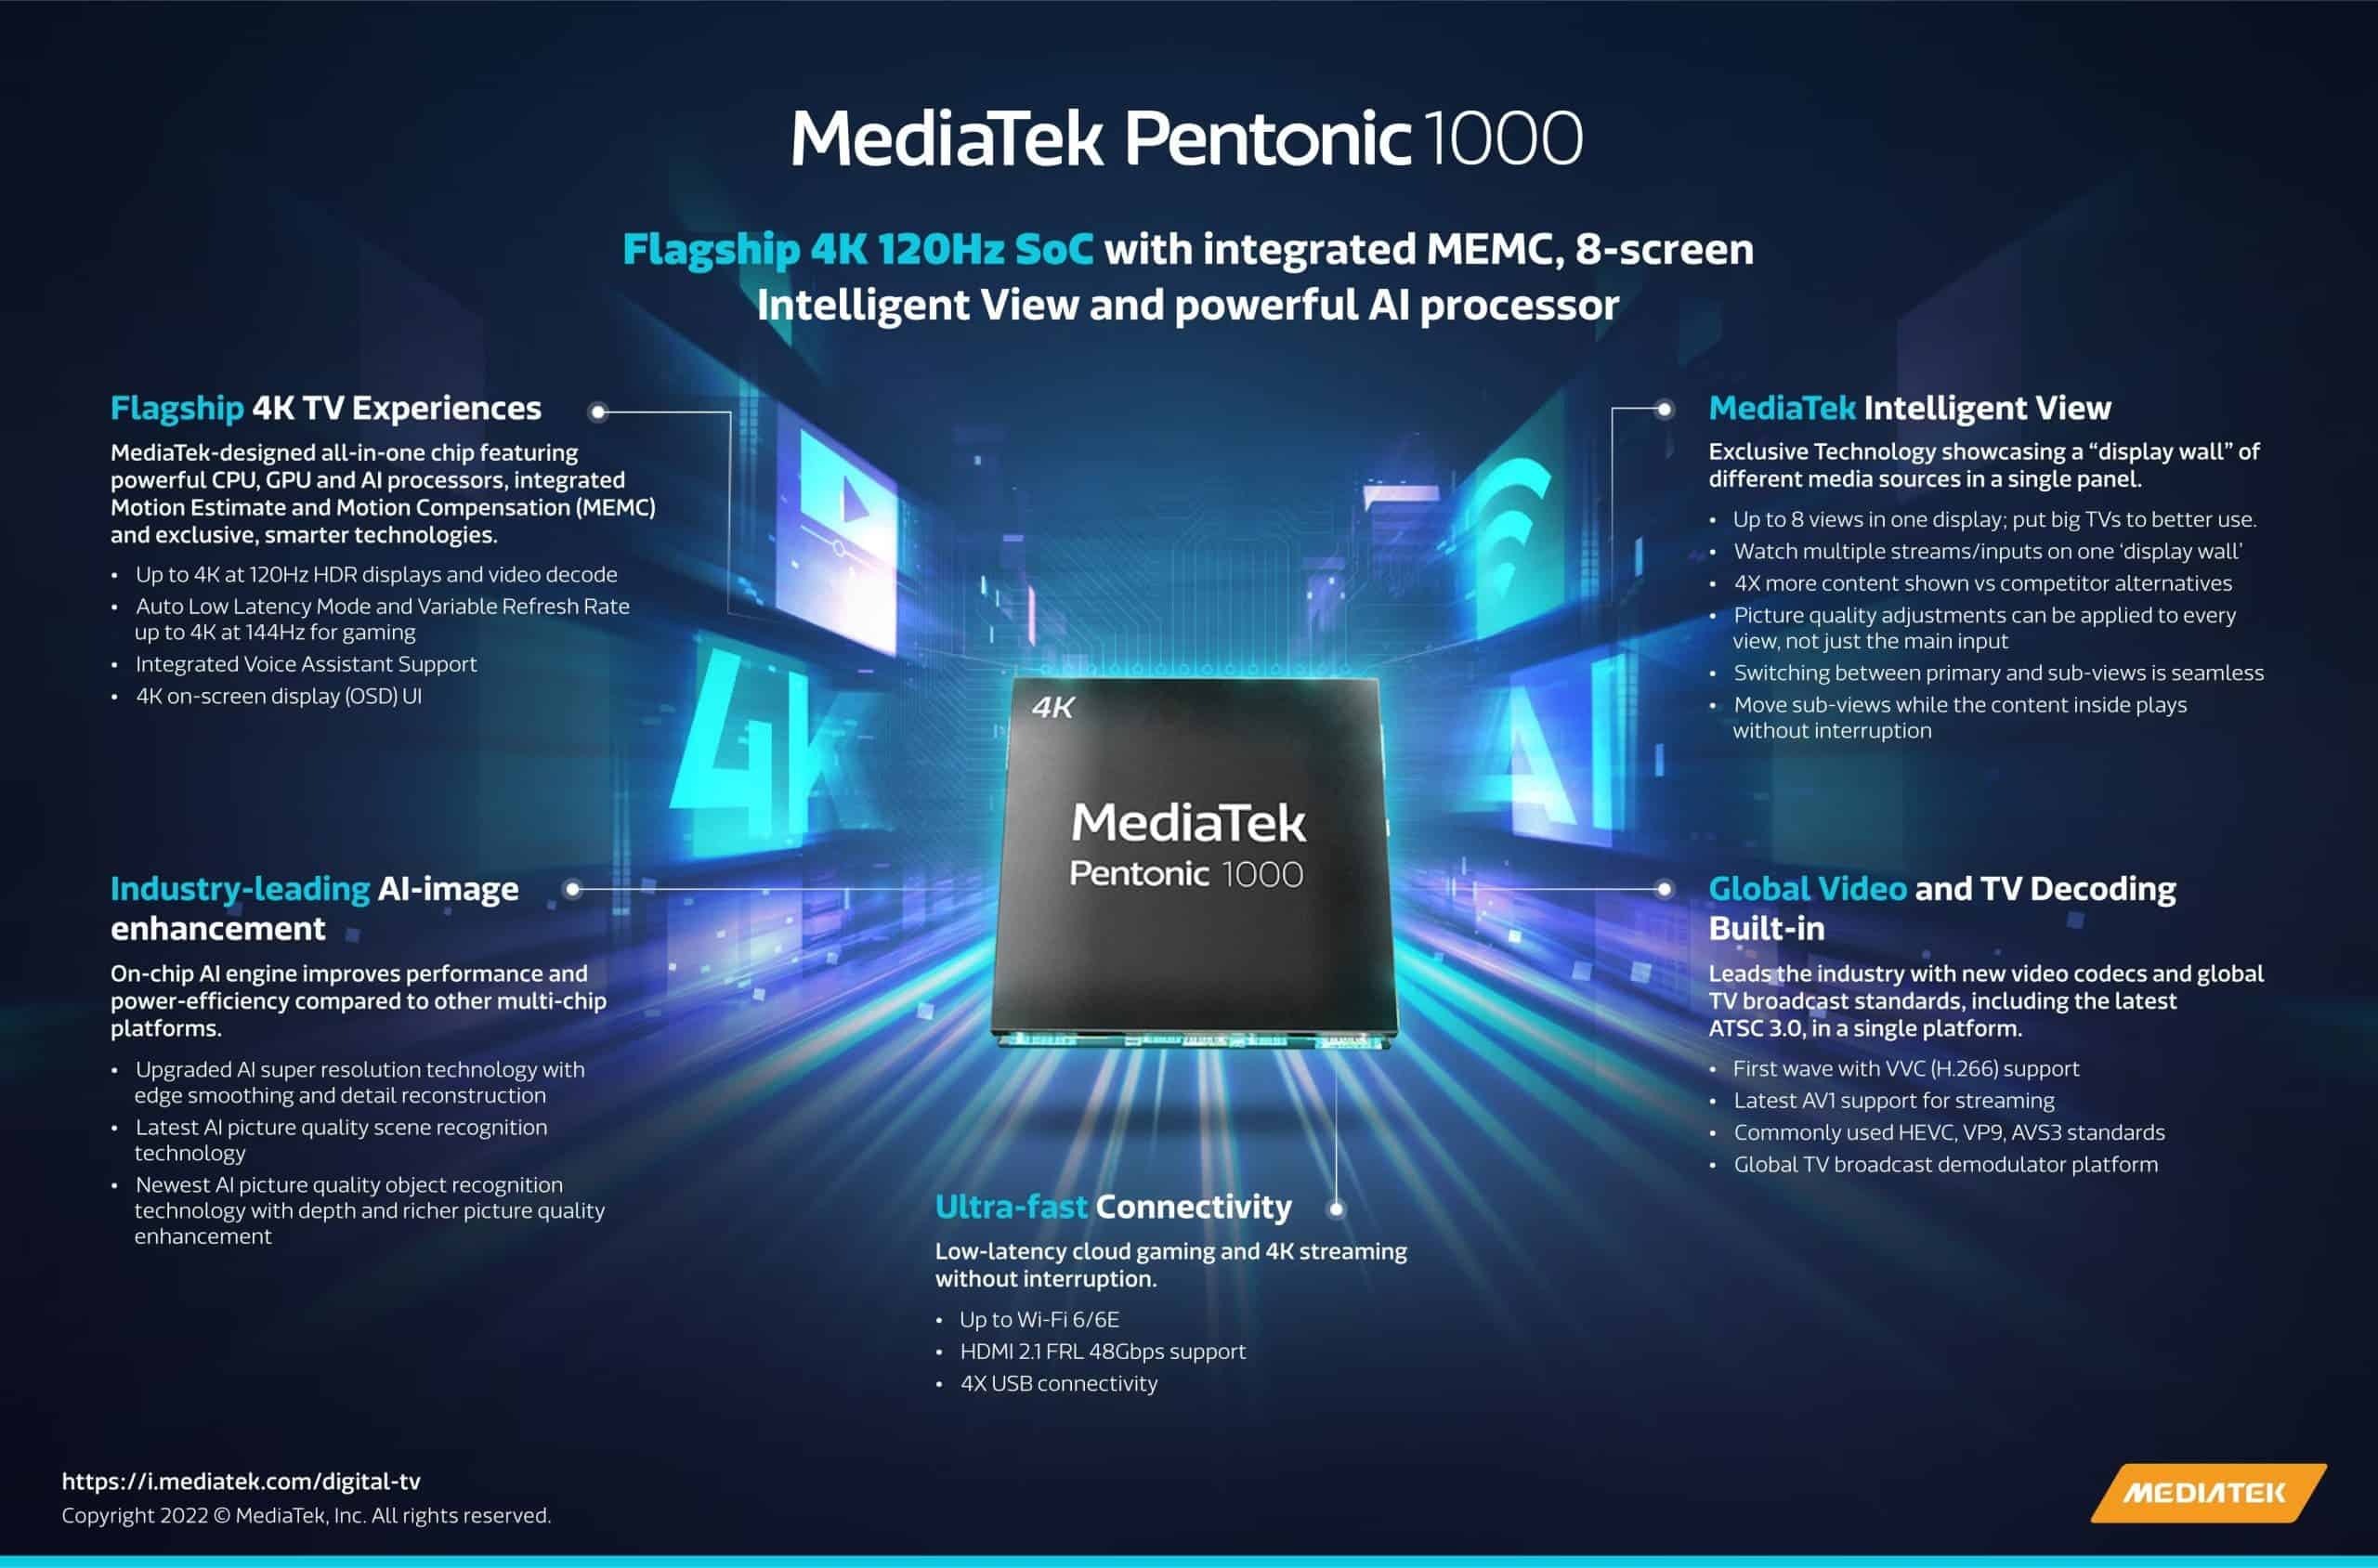 mediatek-pentonic-1000-scaled-1.jpeg (312 KB)